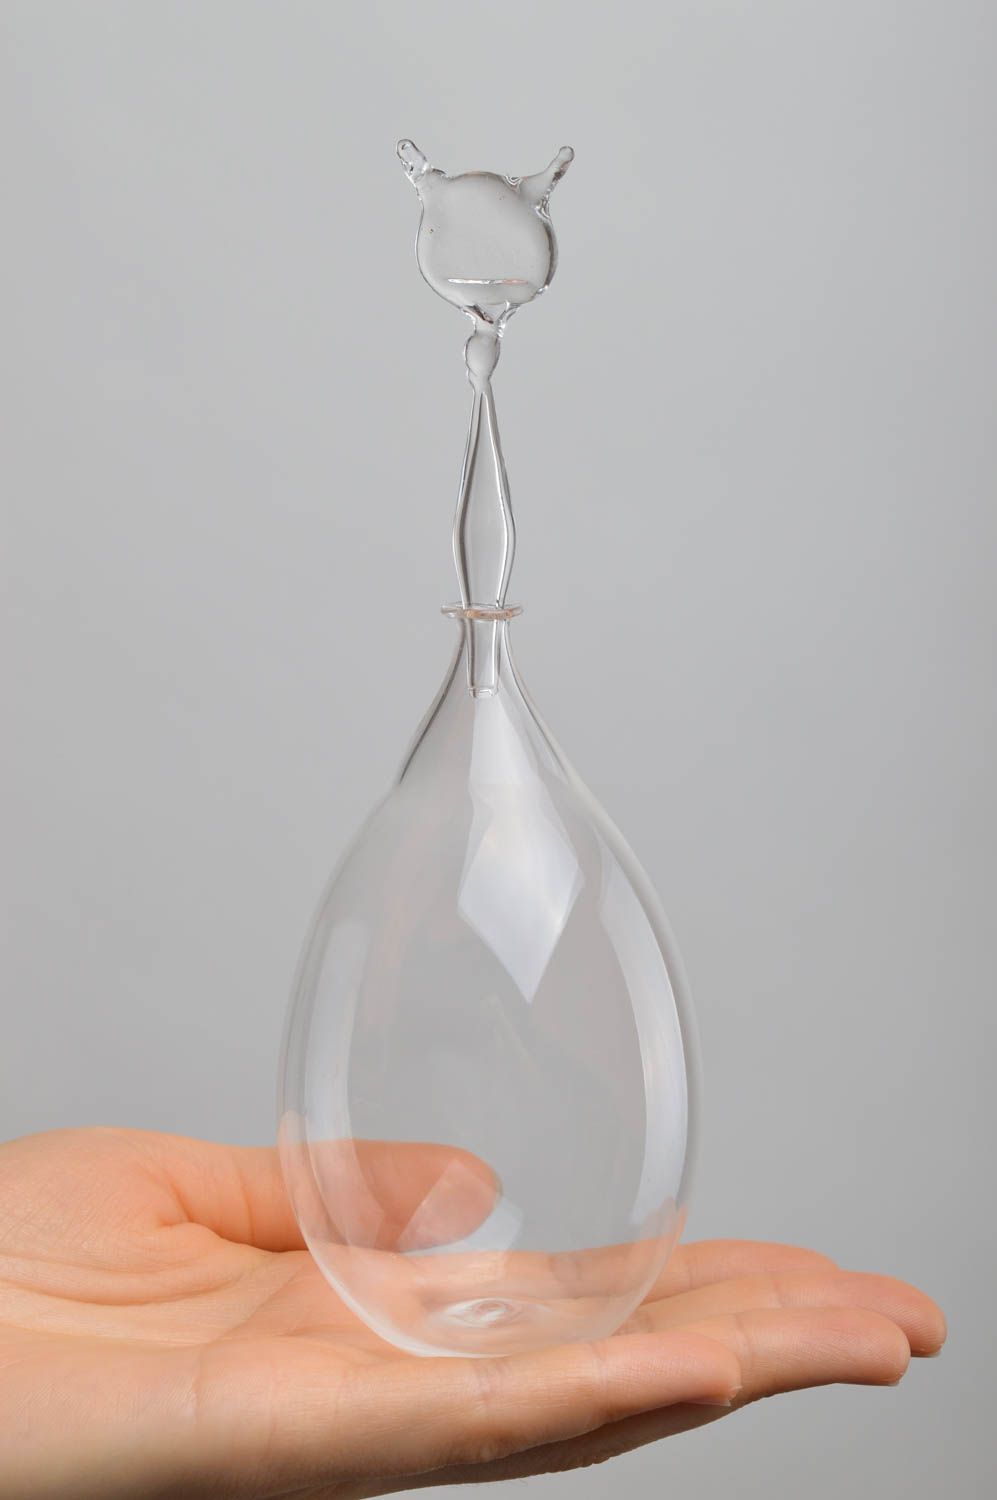 Handmade glass vial small glass jars glass art perfume bottle gifts for women photo 5